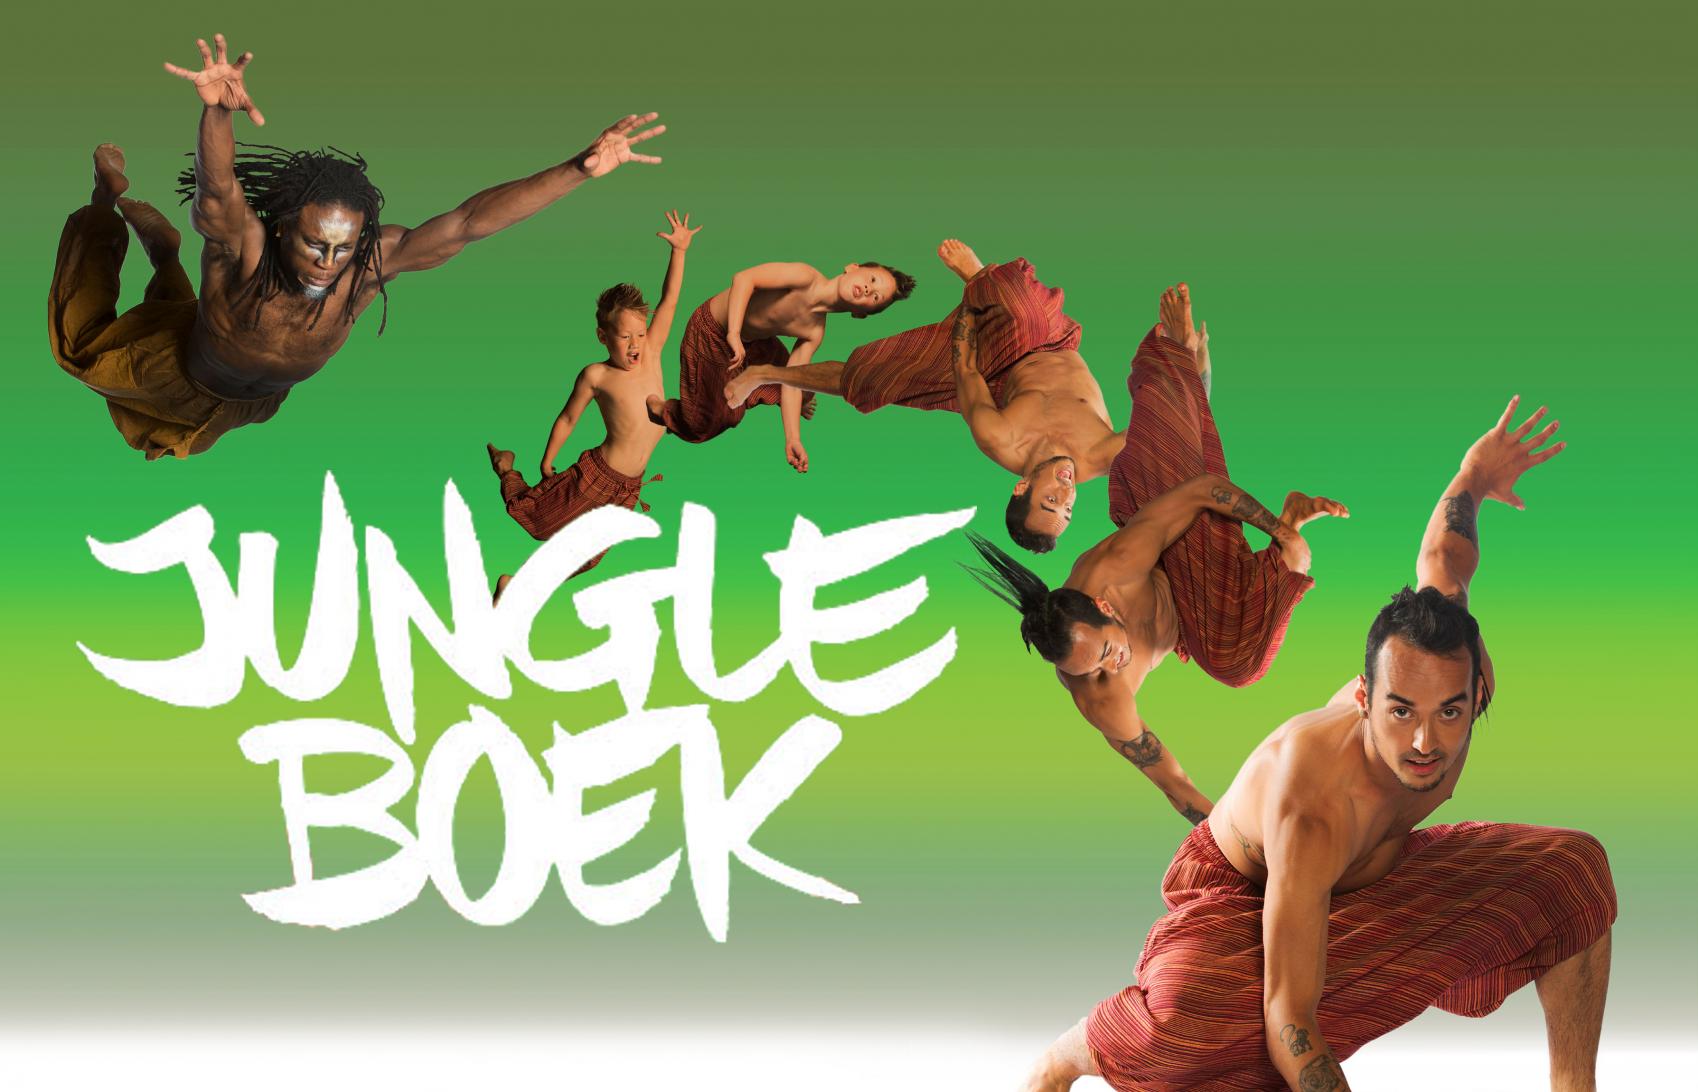 Jungleboek - The making of… _235